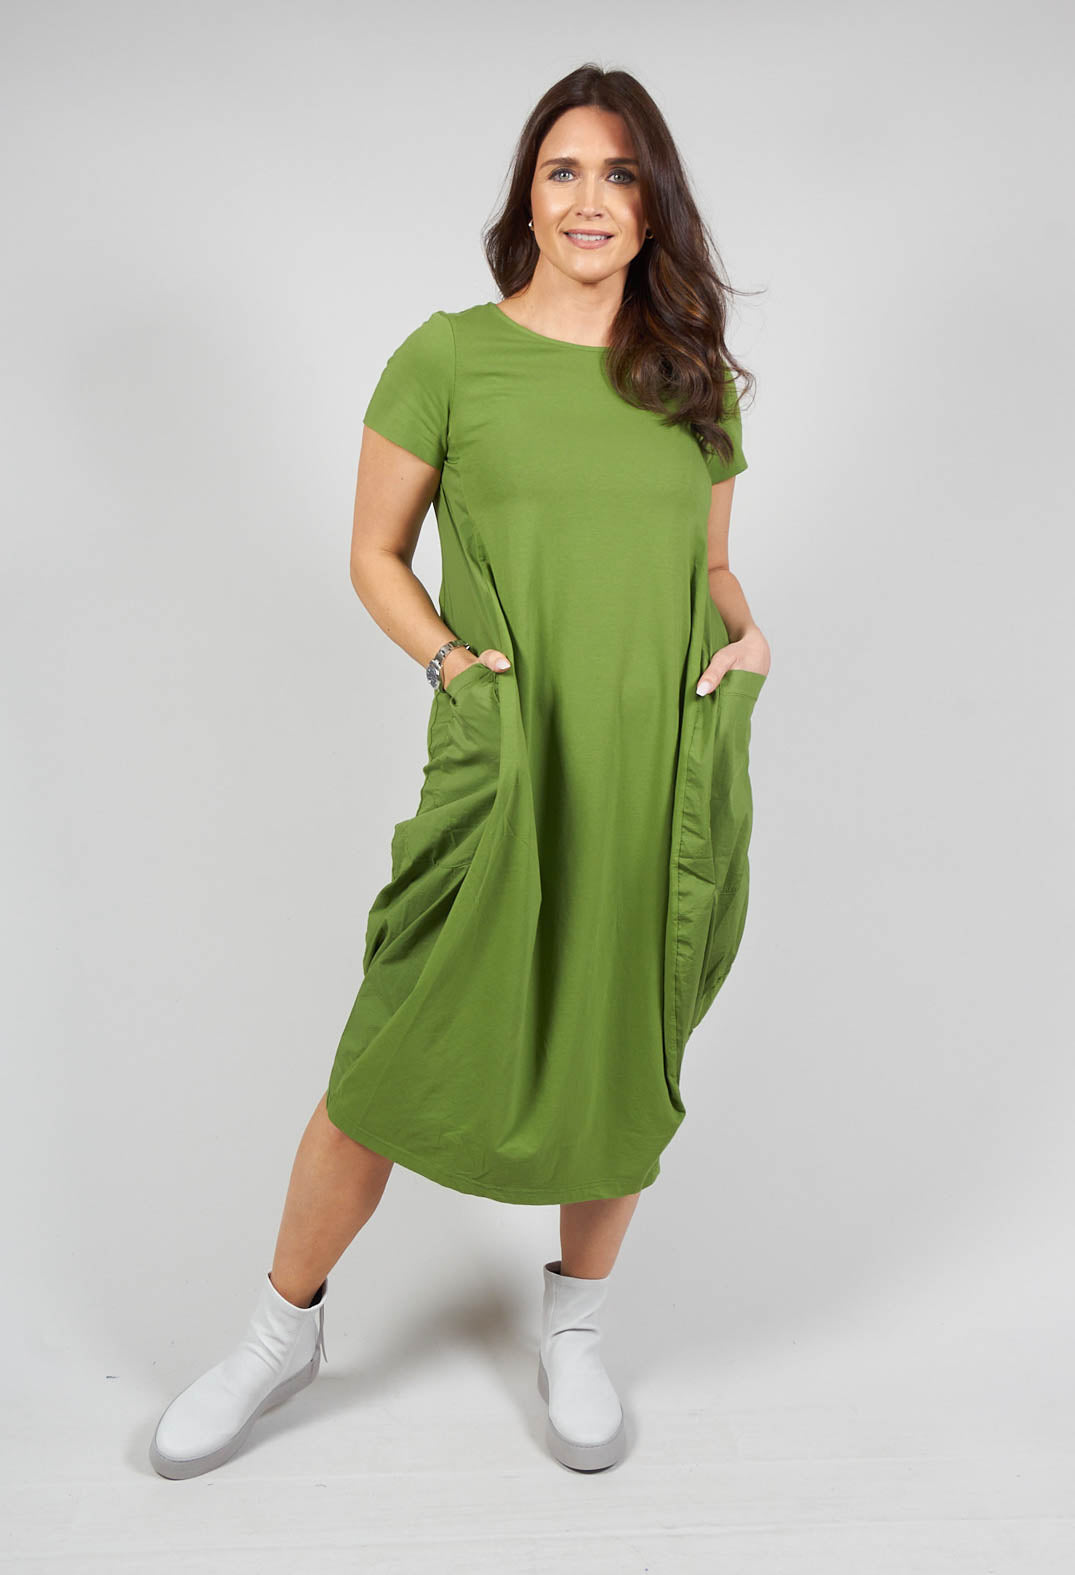 Munch Dress in Avocado – Olivia May